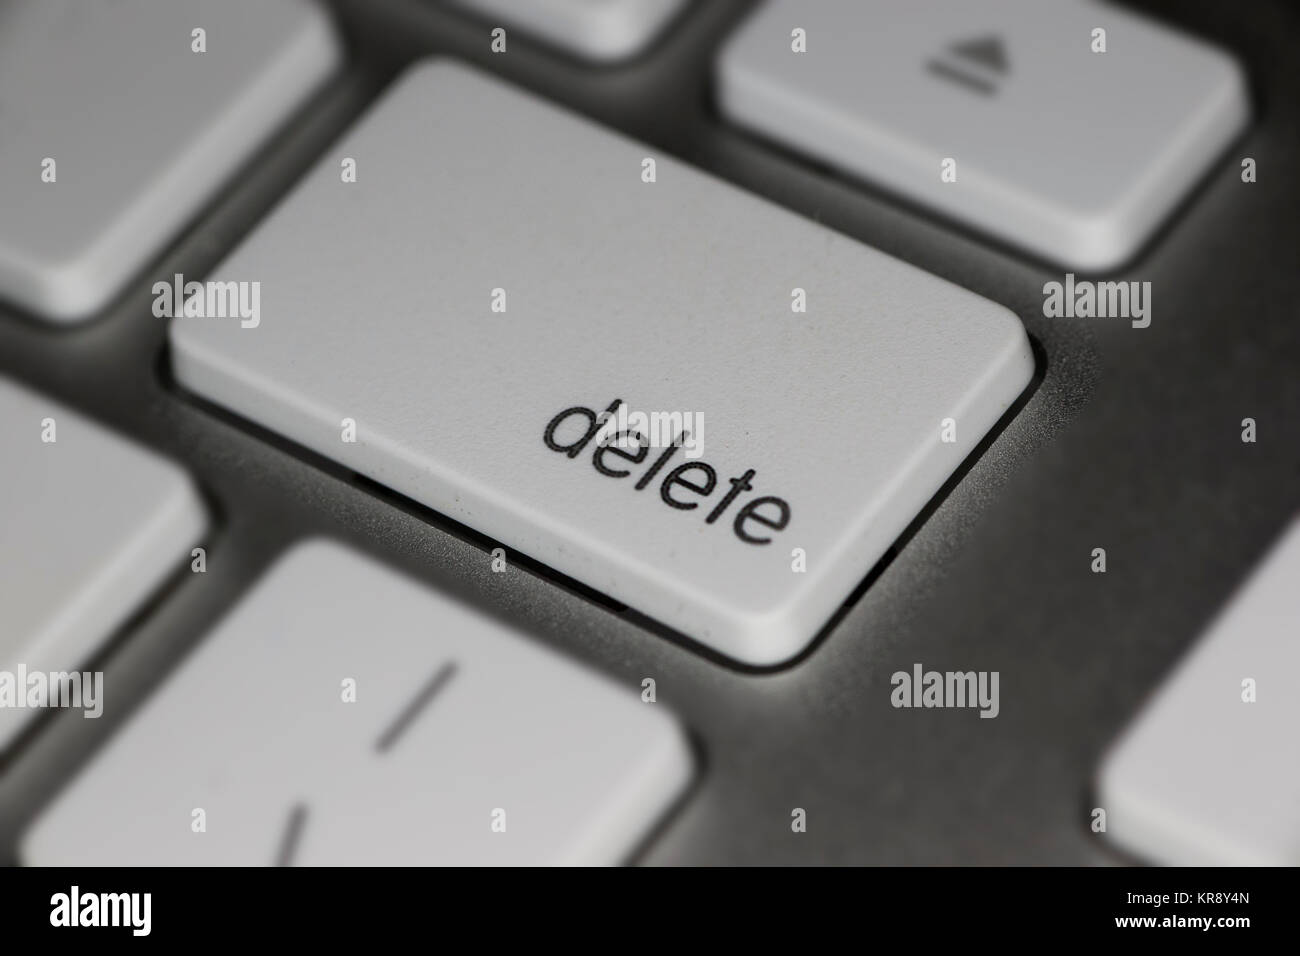 Closeup of delete key on computer keyboard with white keys on dark background Stock Photo